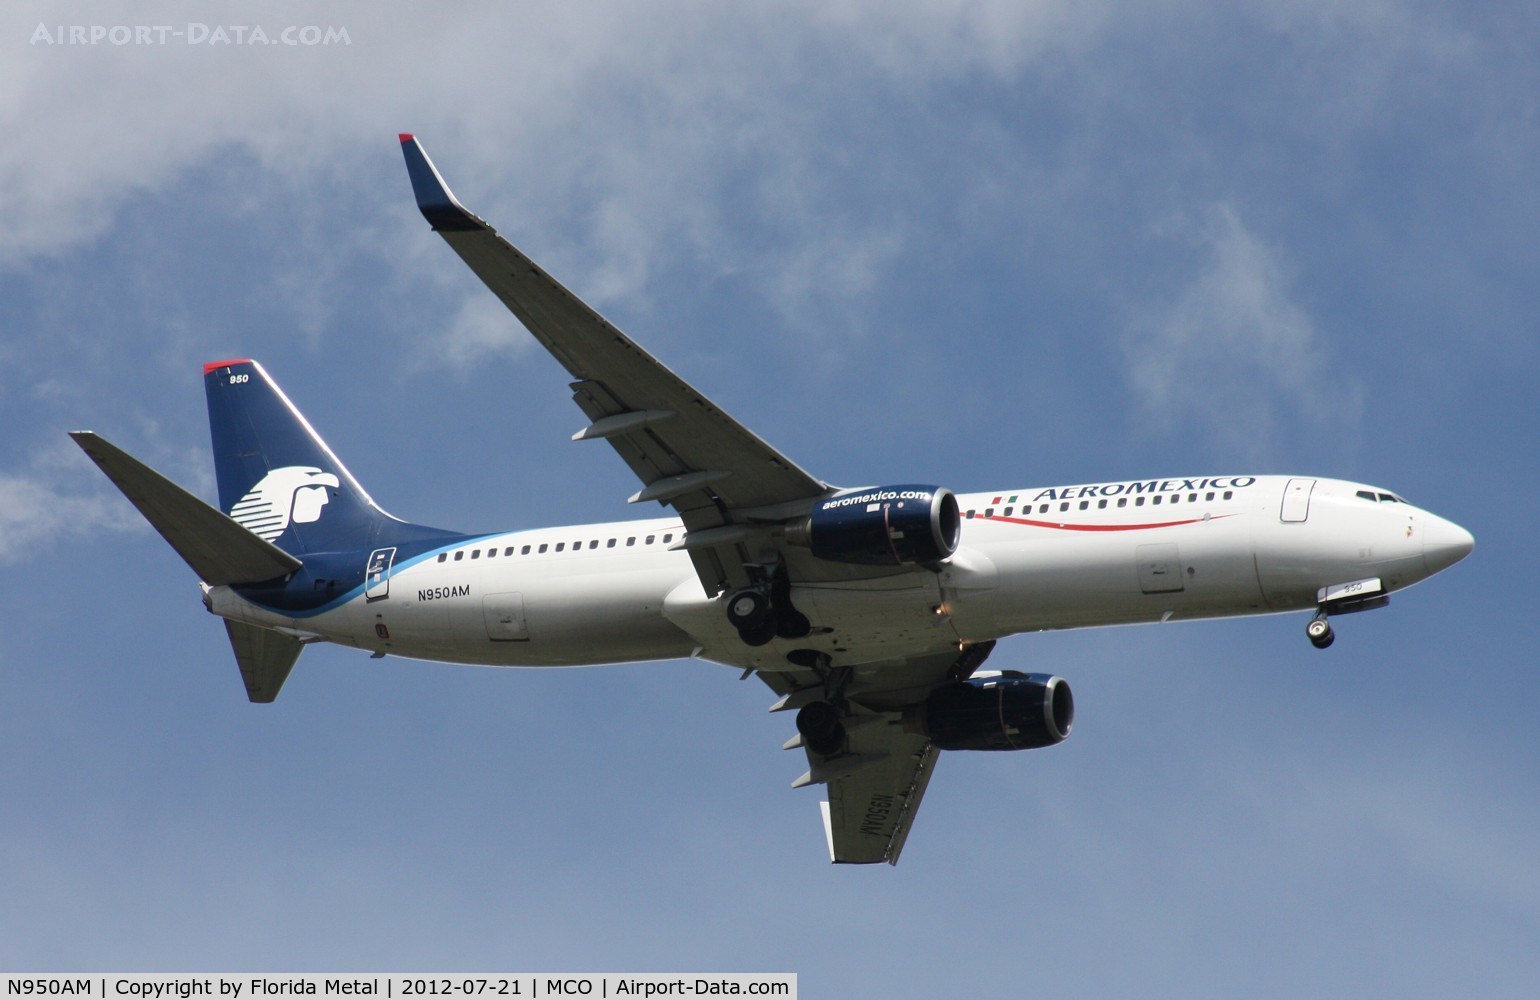 N950AM, 2006 Boeing 737-852 C/N 35115, Aeromexico 737-800